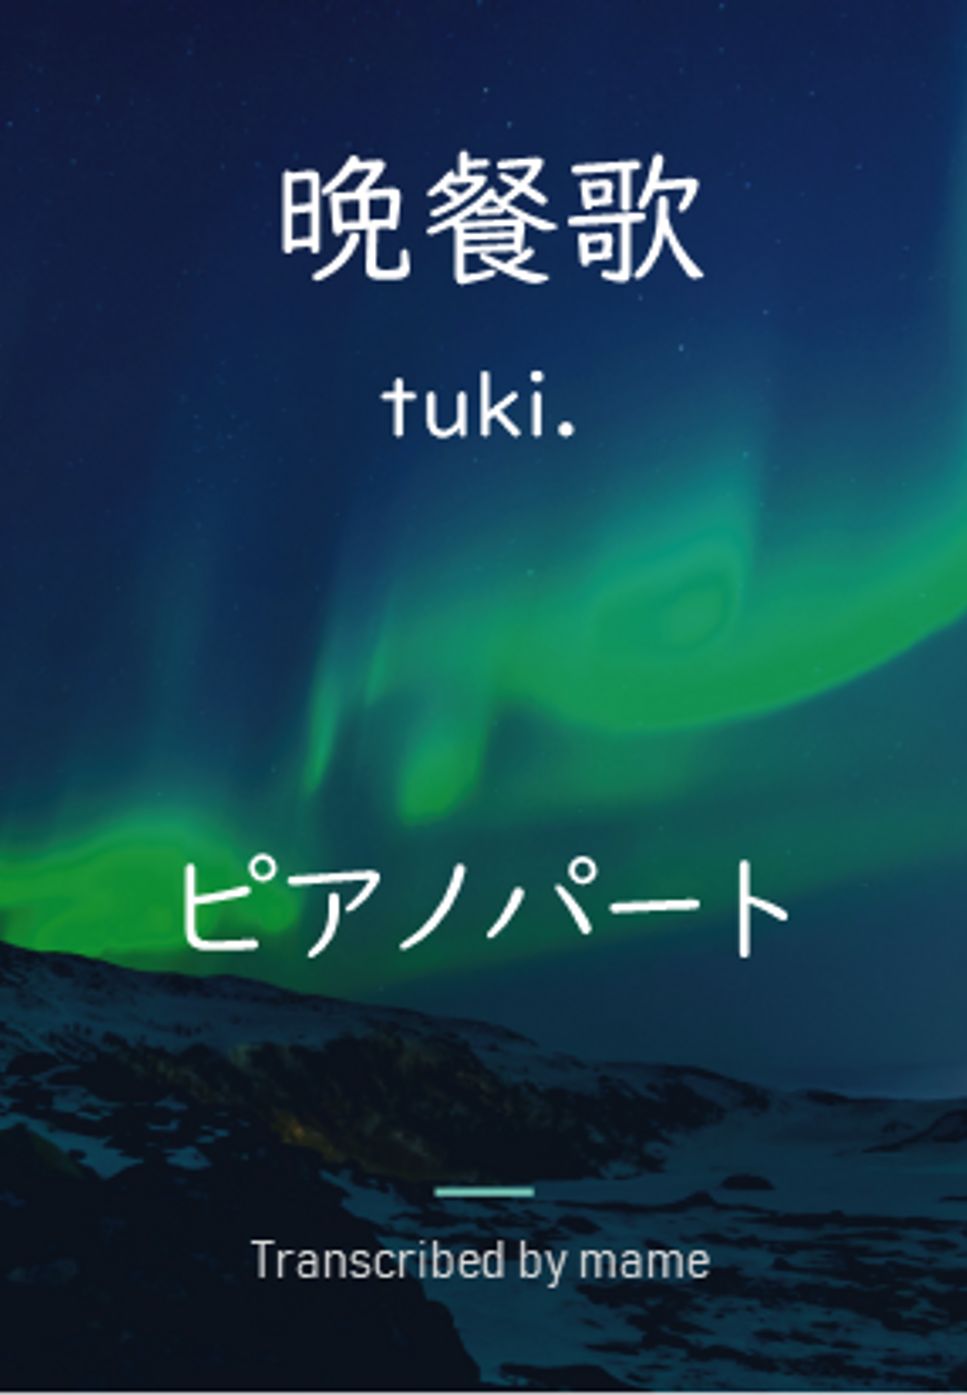 tuki. - 晩餐歌 (ピアノパート) by mame